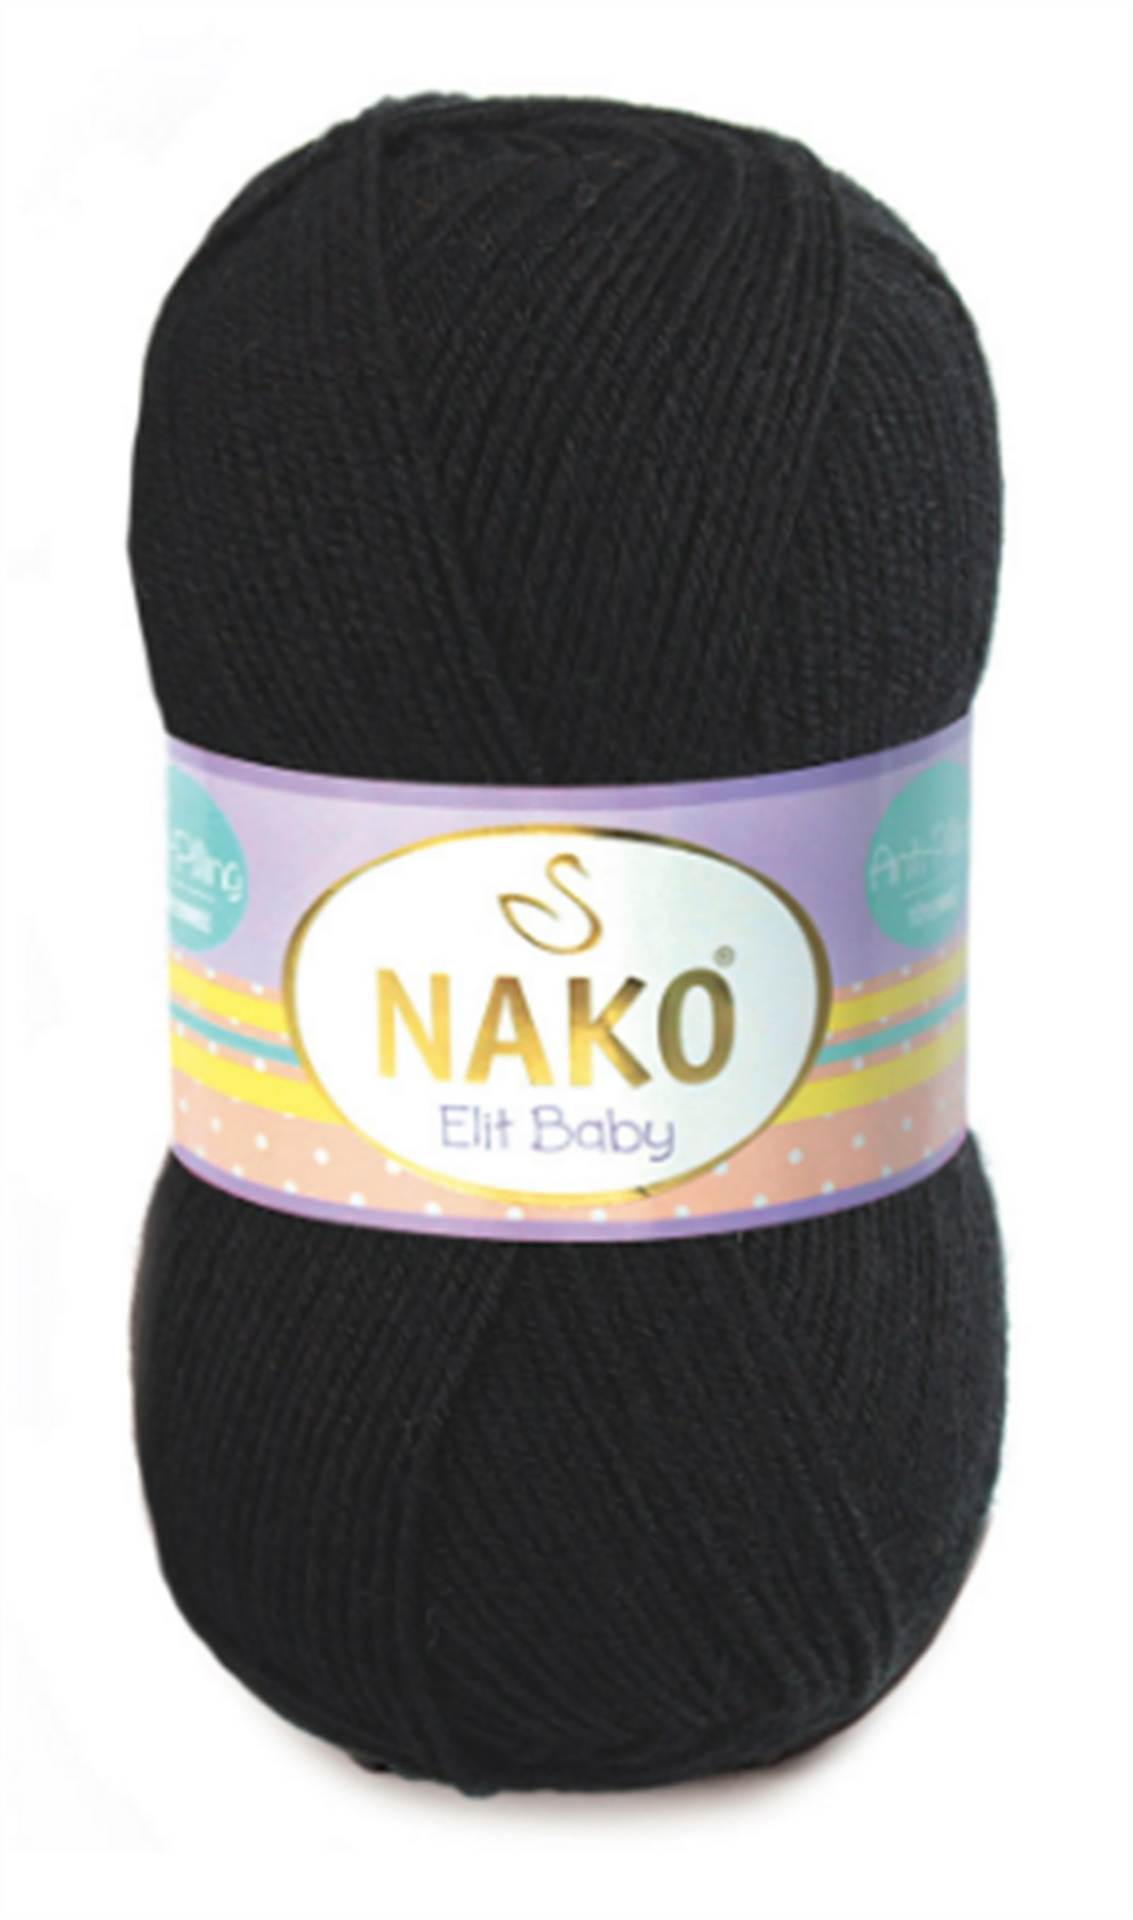 Nako Elite Baby 217 | Lint-Free Thread | Baby Rope